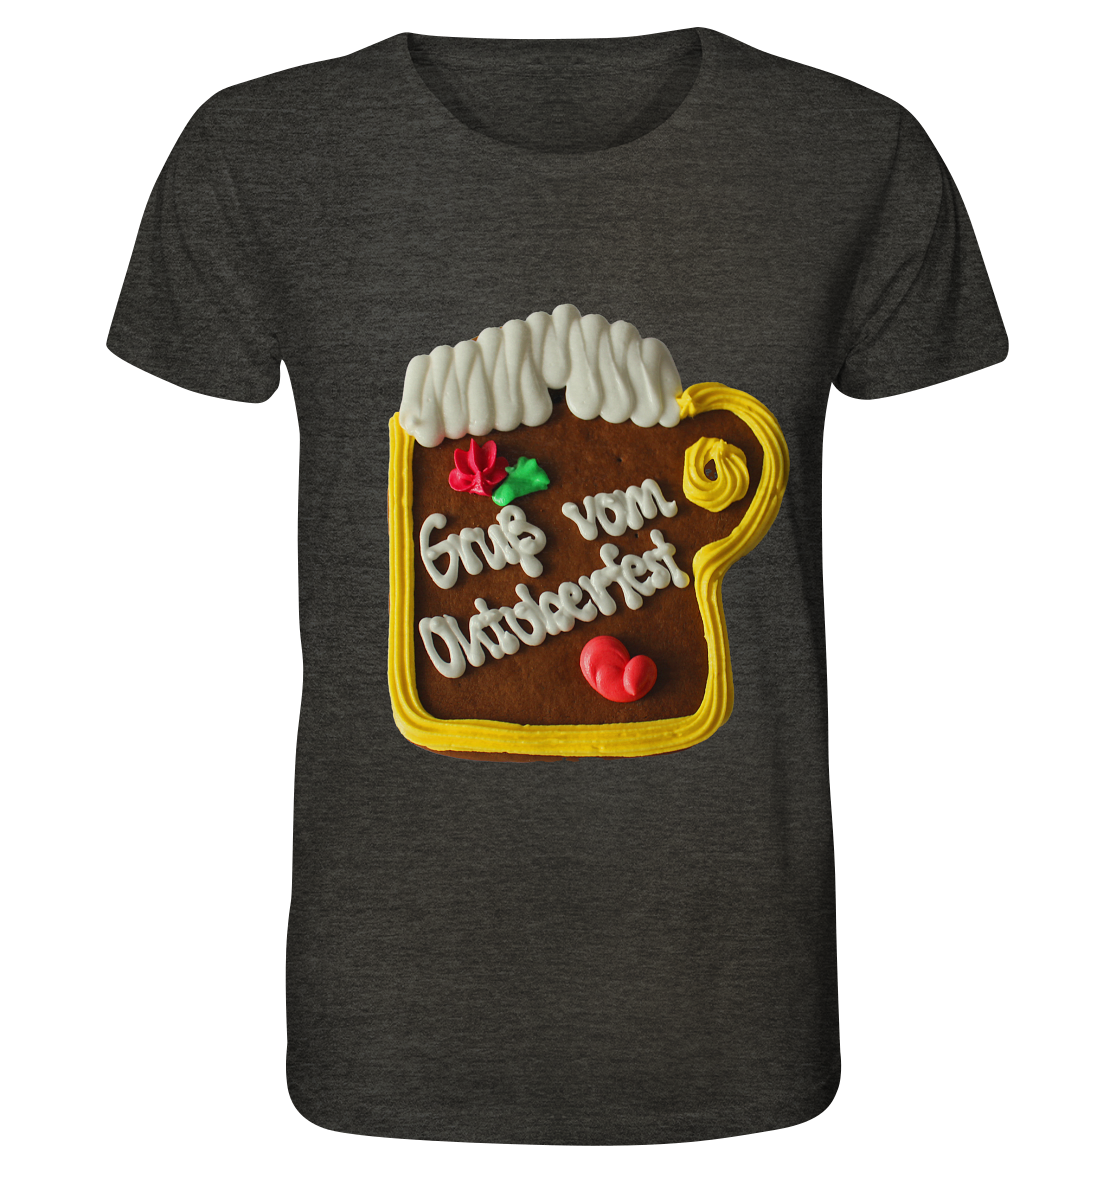 Lebkuchenkrug Gruß vom Oktoberfest ,Herbstferst,Volksfest - Organic Shirt (meliert)